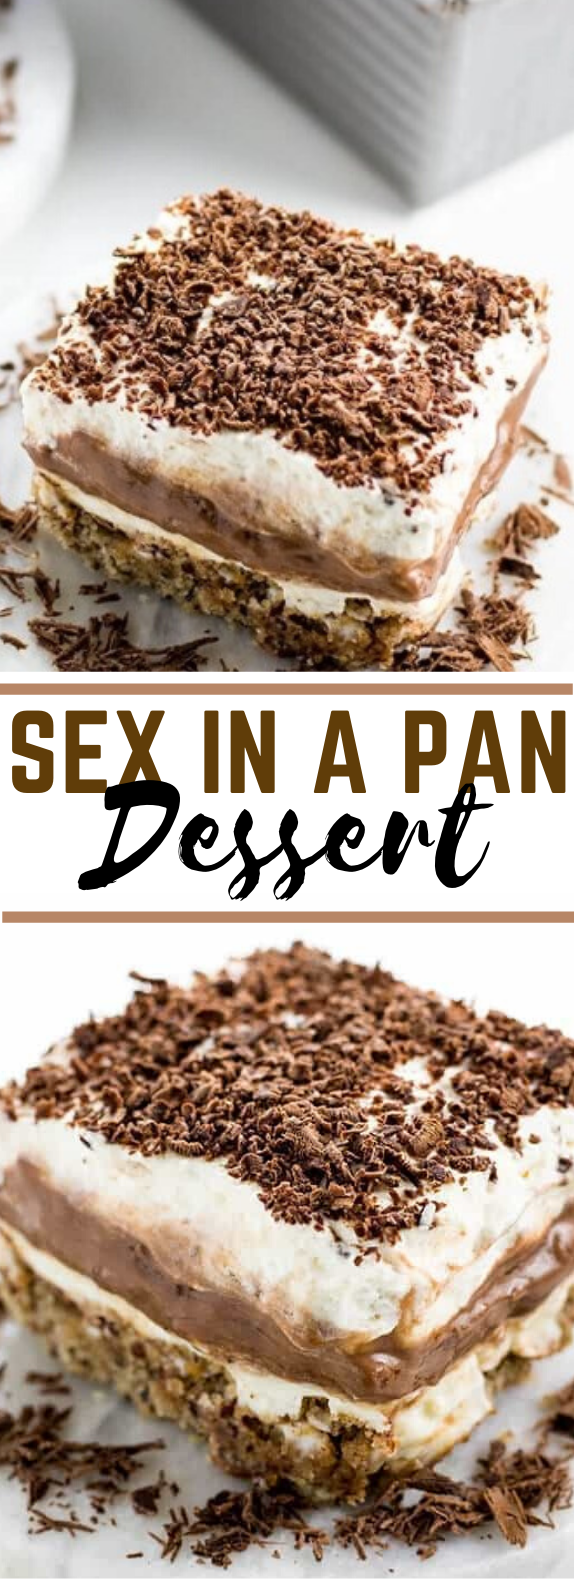 Sex In A Pan Dessert Recipe Sugar Free Low Carb Gluten Free Cake